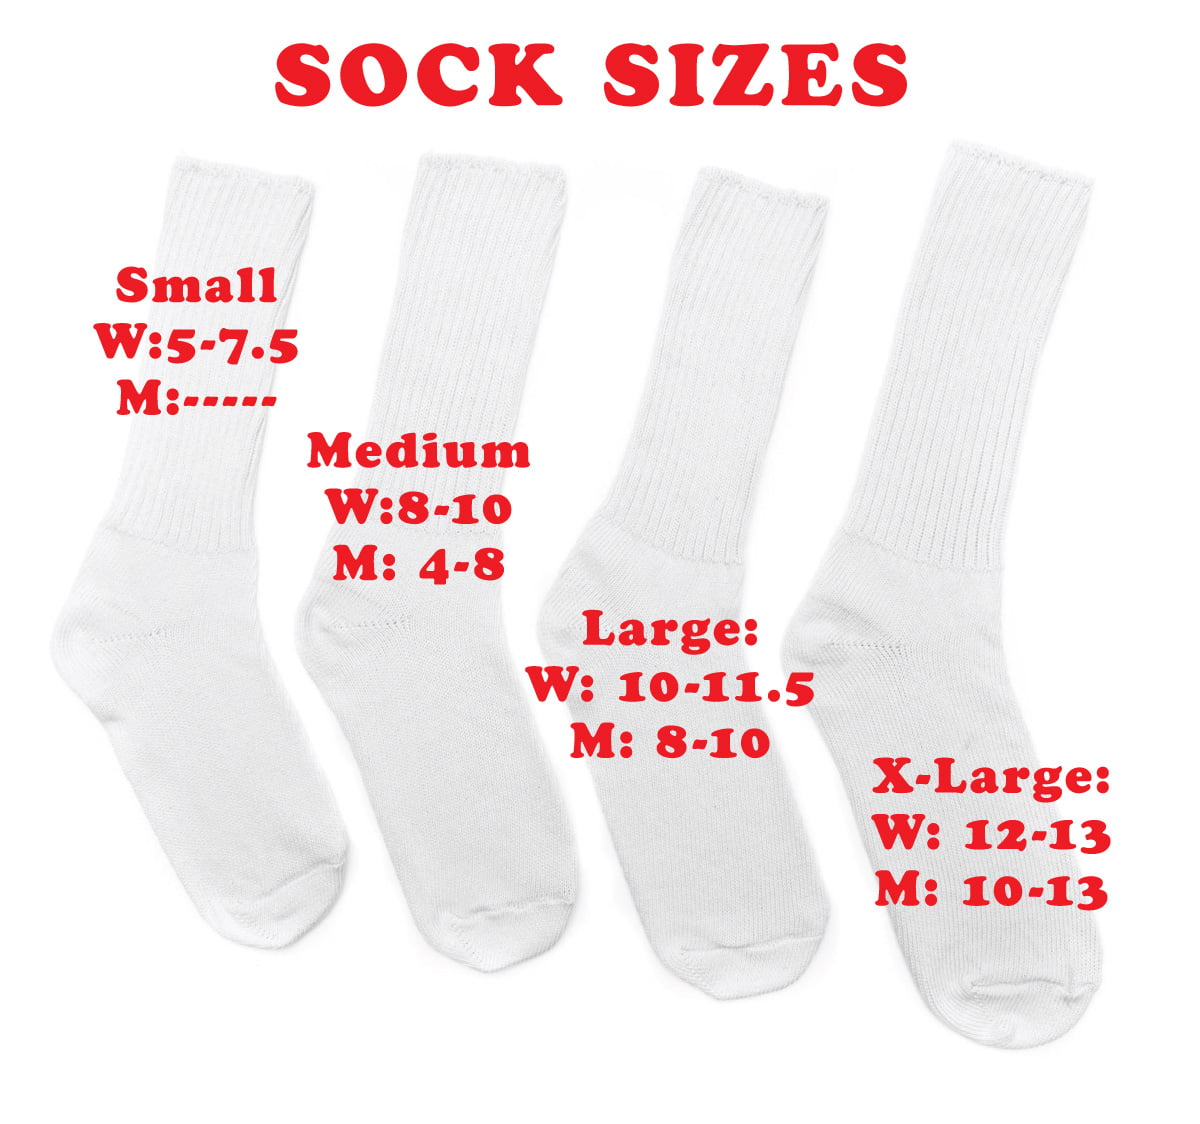 Sock Sizing:

Small
W:5-7.5
M:-----

Medium
W:8-10
M: 4-8

Large:
W: 10-11.5
M: 8-10

Extra Large:
W: 12-13
M: 10-13